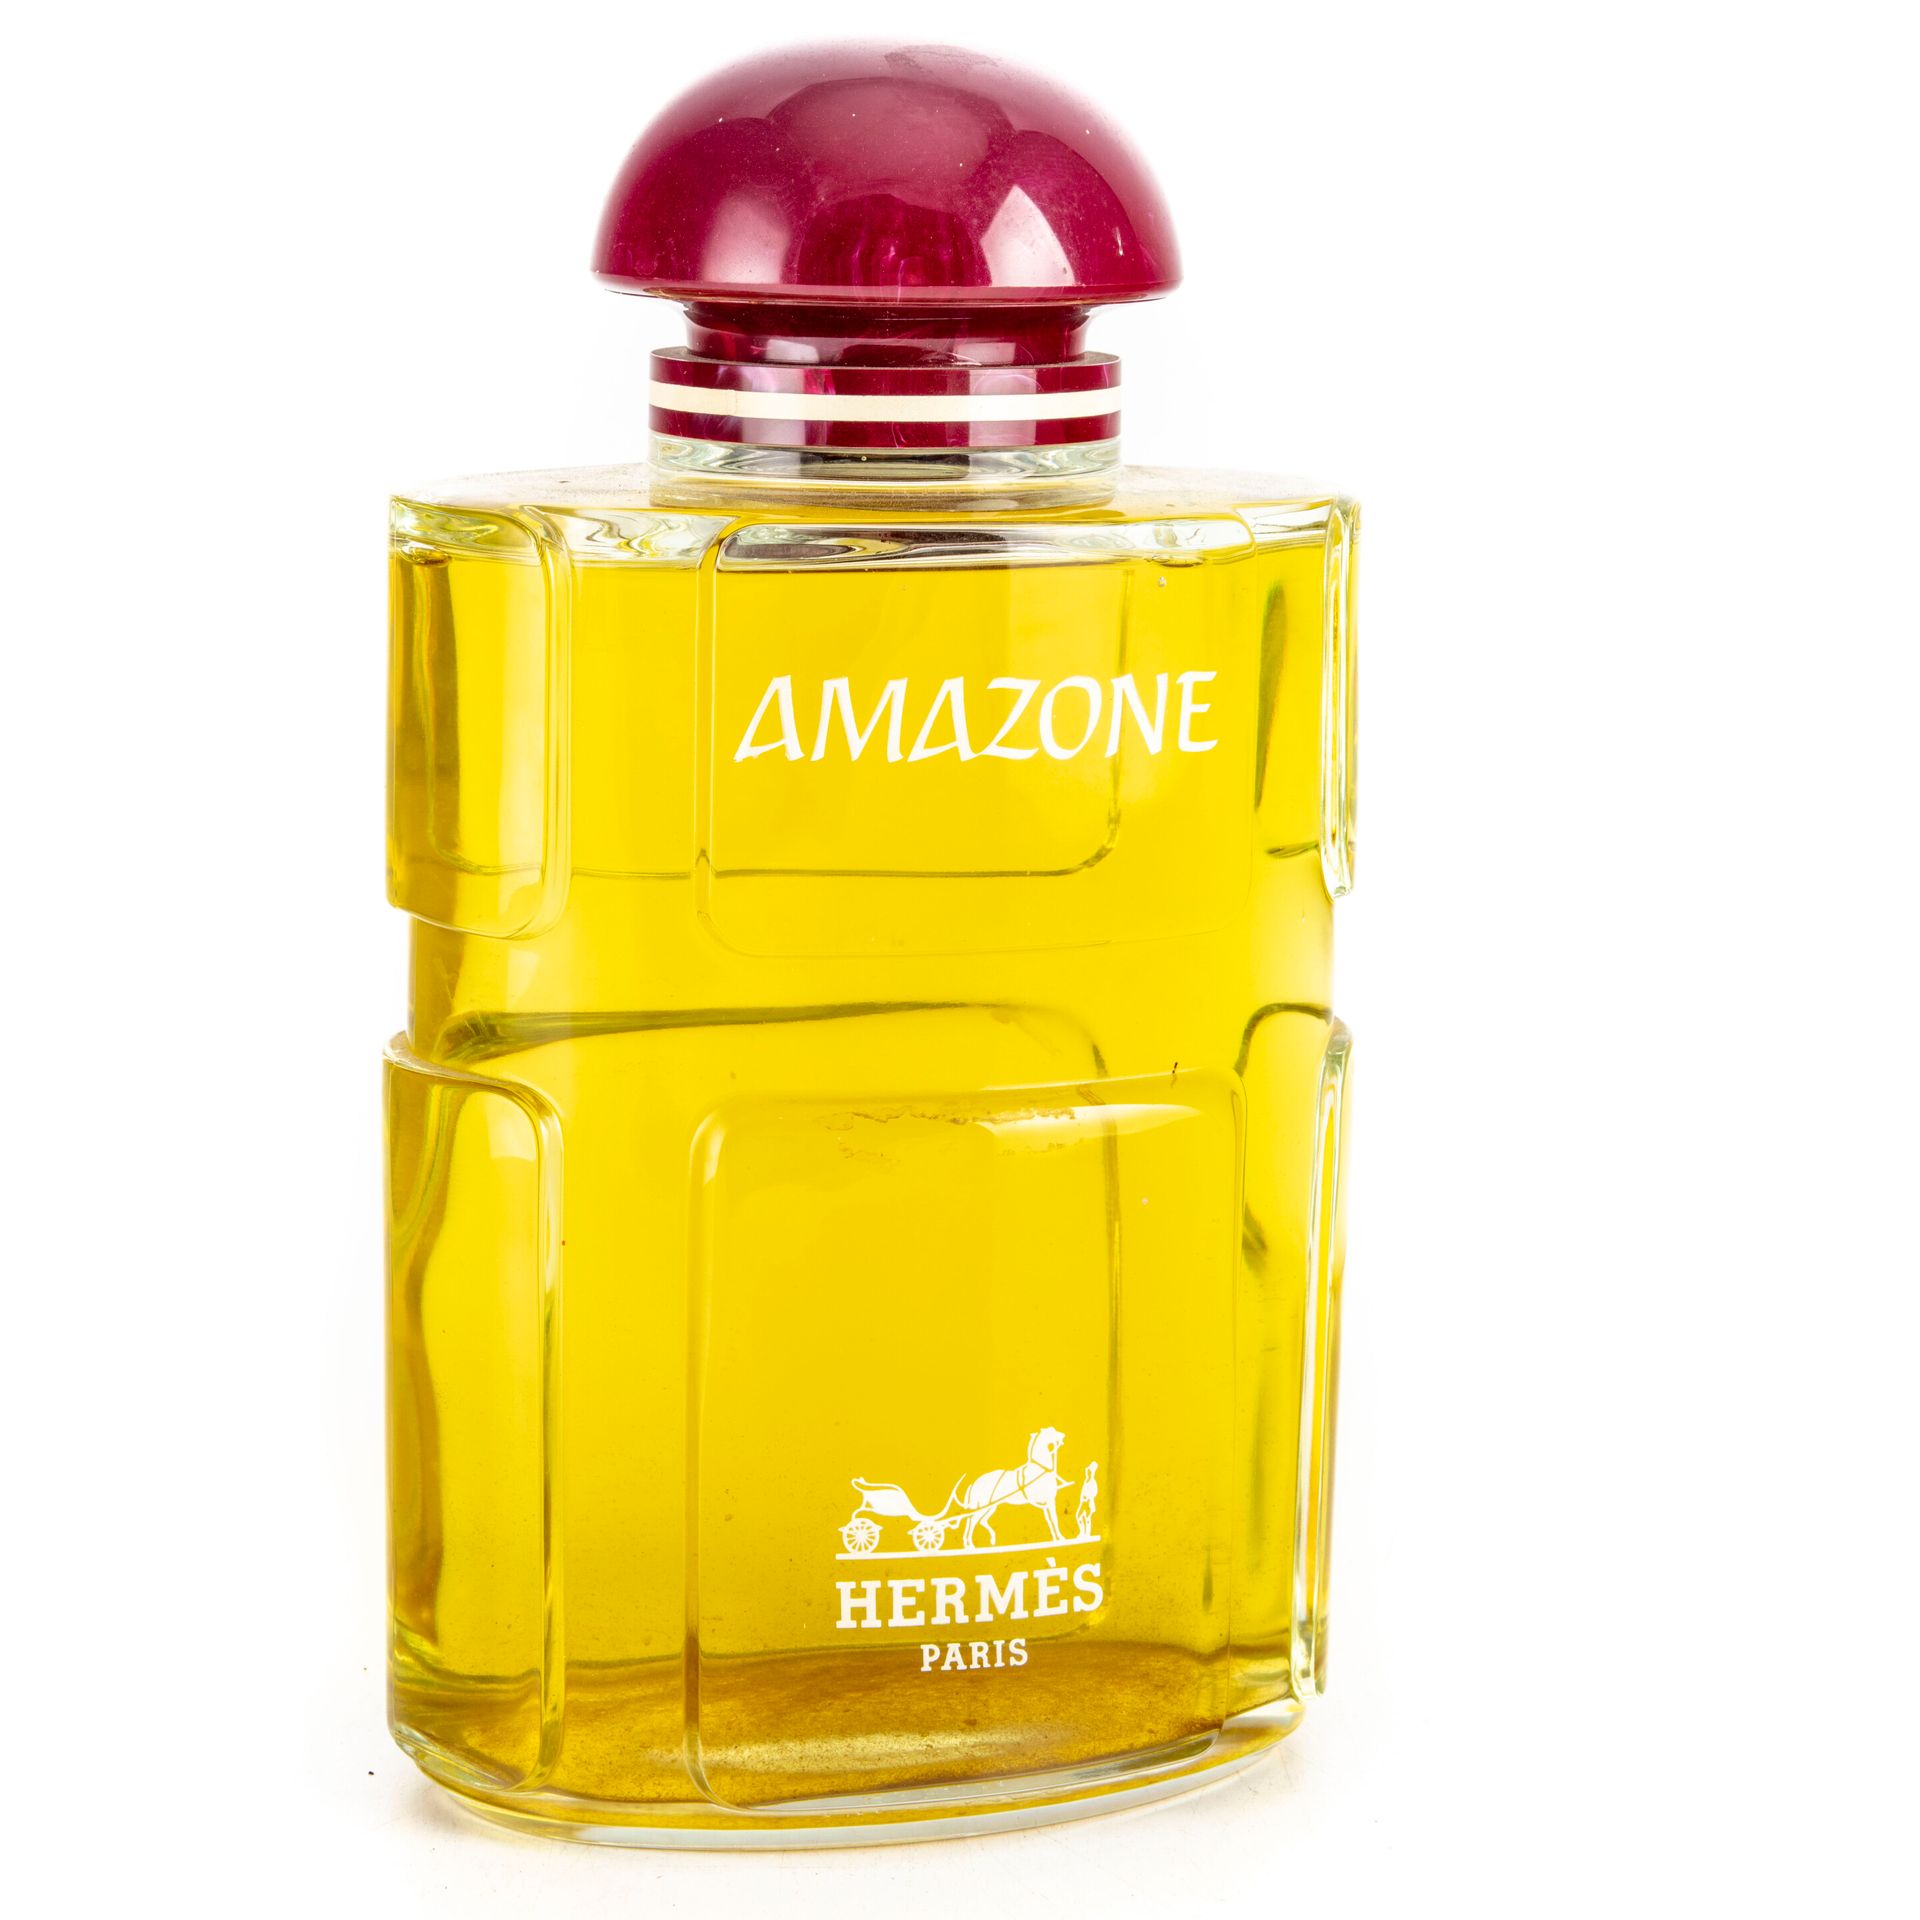 Null HERMES - París 

Frasco de vidrio, perfume "AMAZONE", maniquí

H. 34 cm